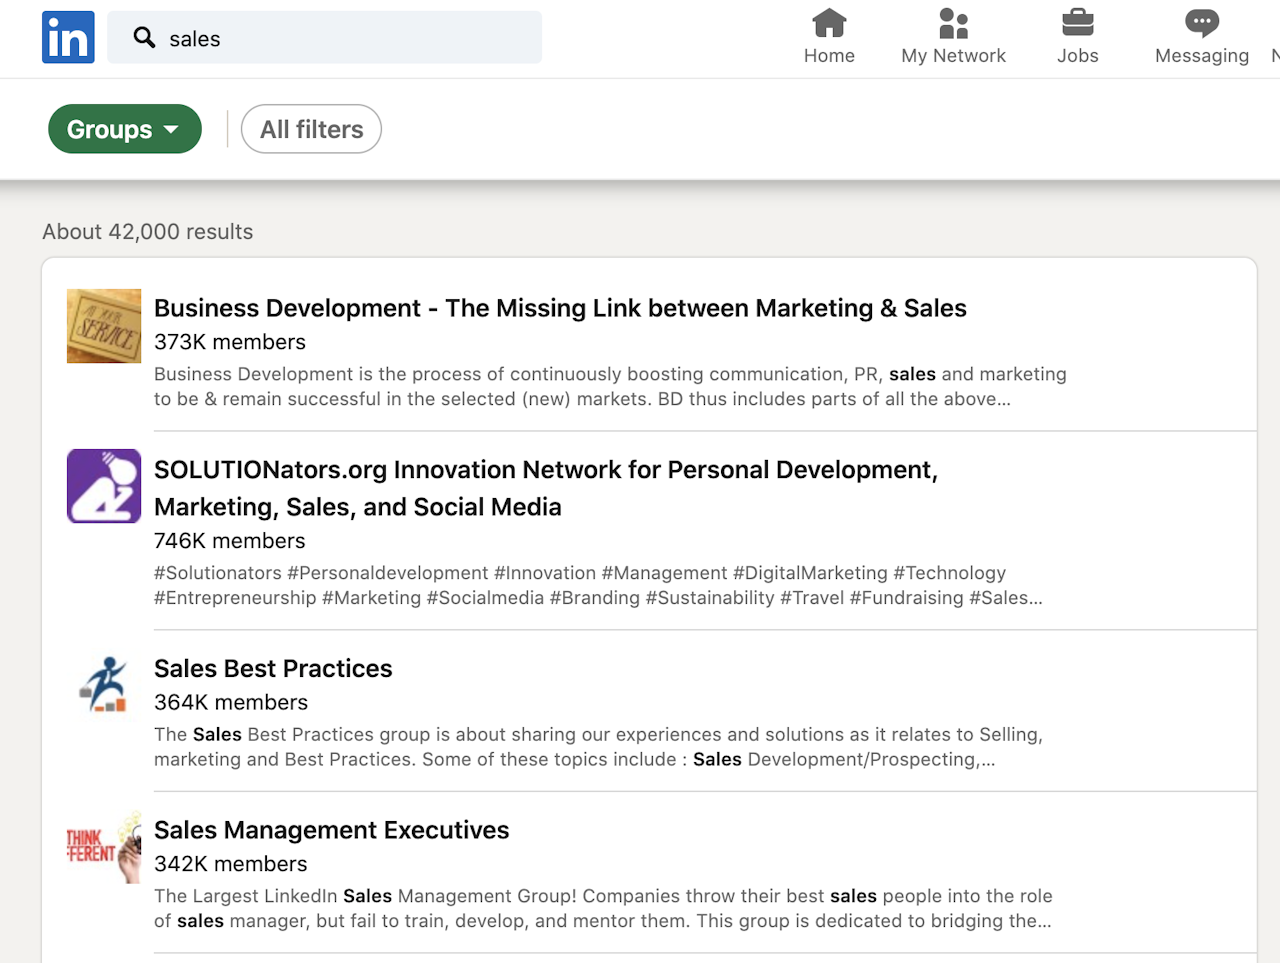 using LinkedIn for sales - LinkedIn groups